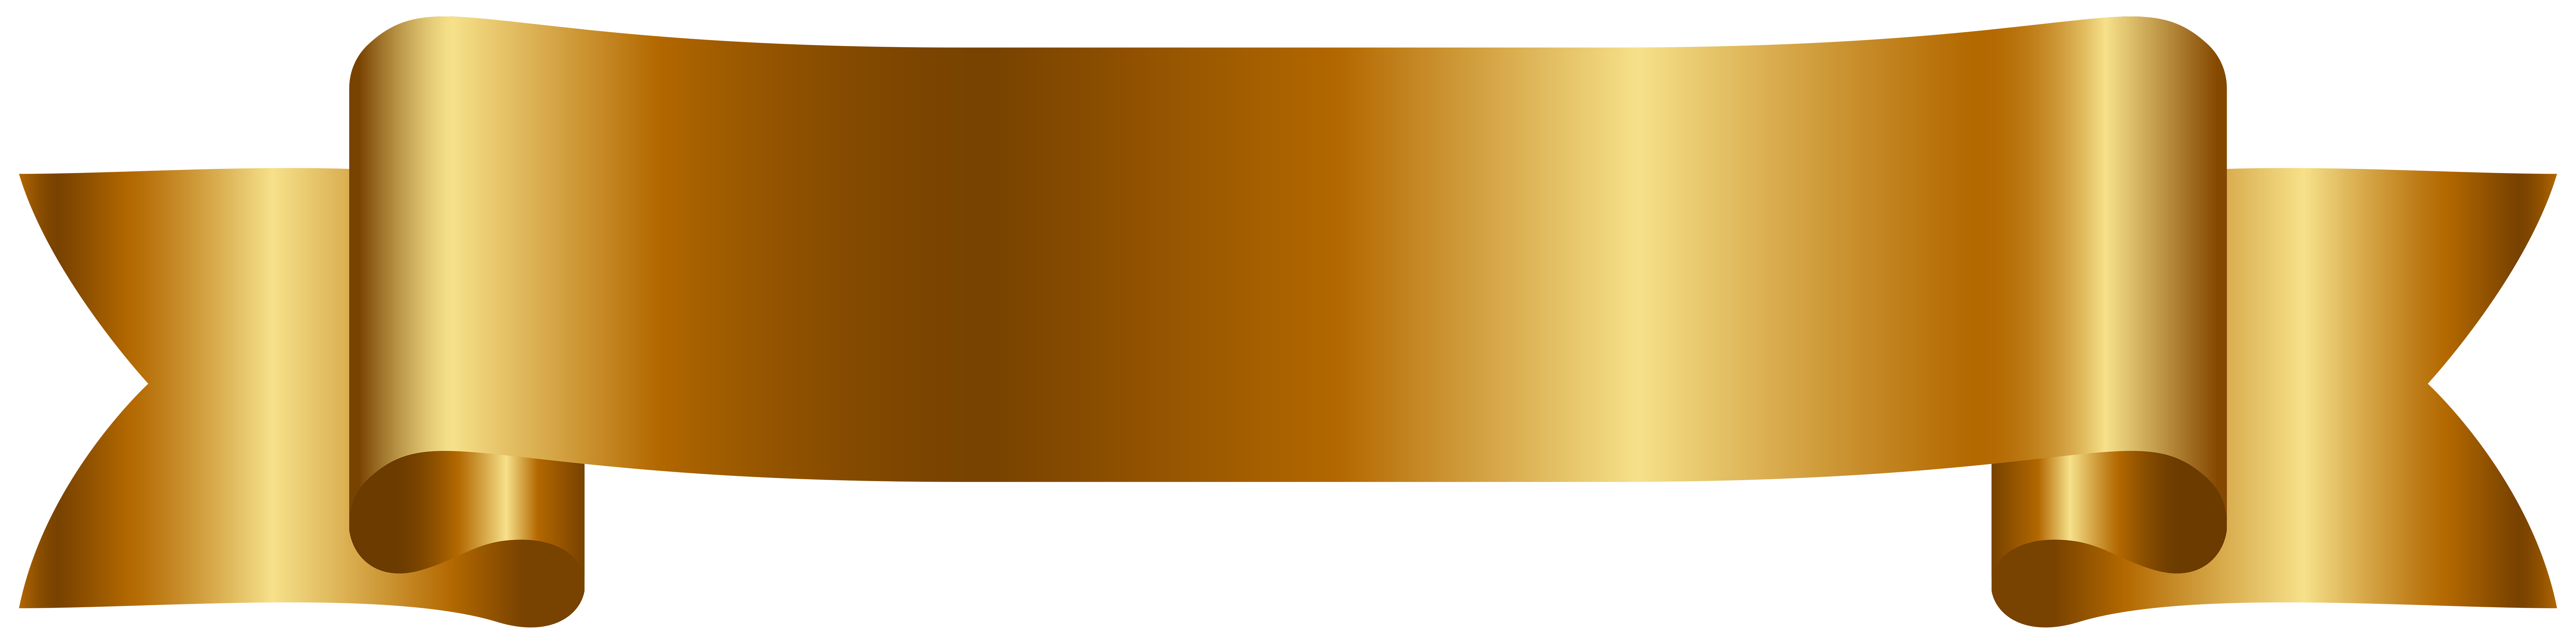 gold clipart clip art